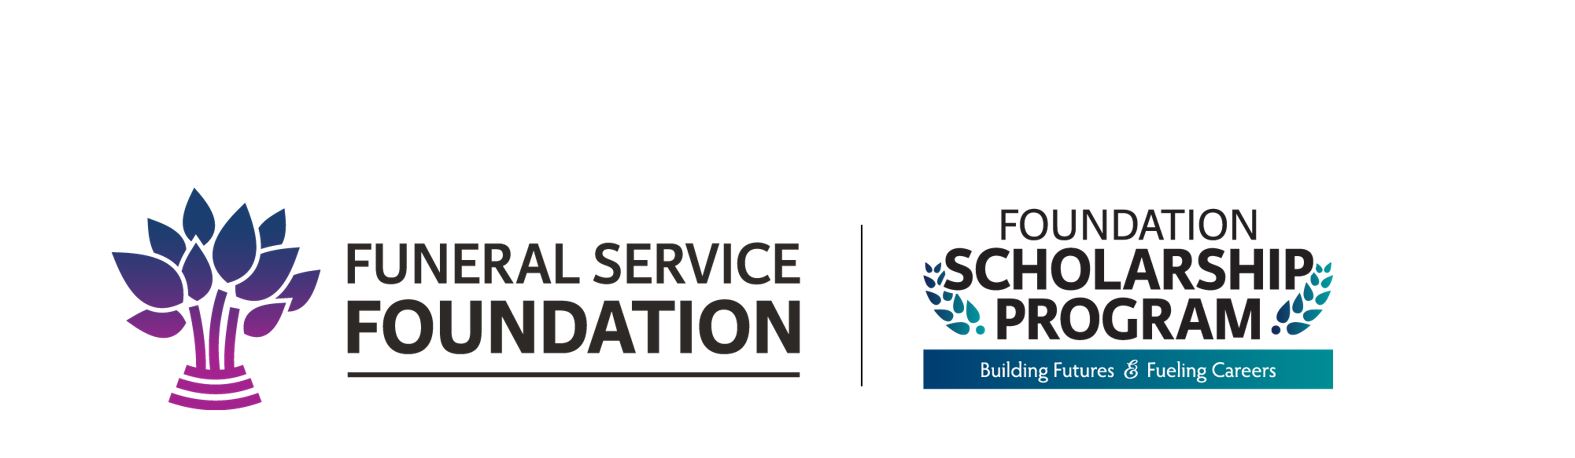 Funeral Svc Foundation logos